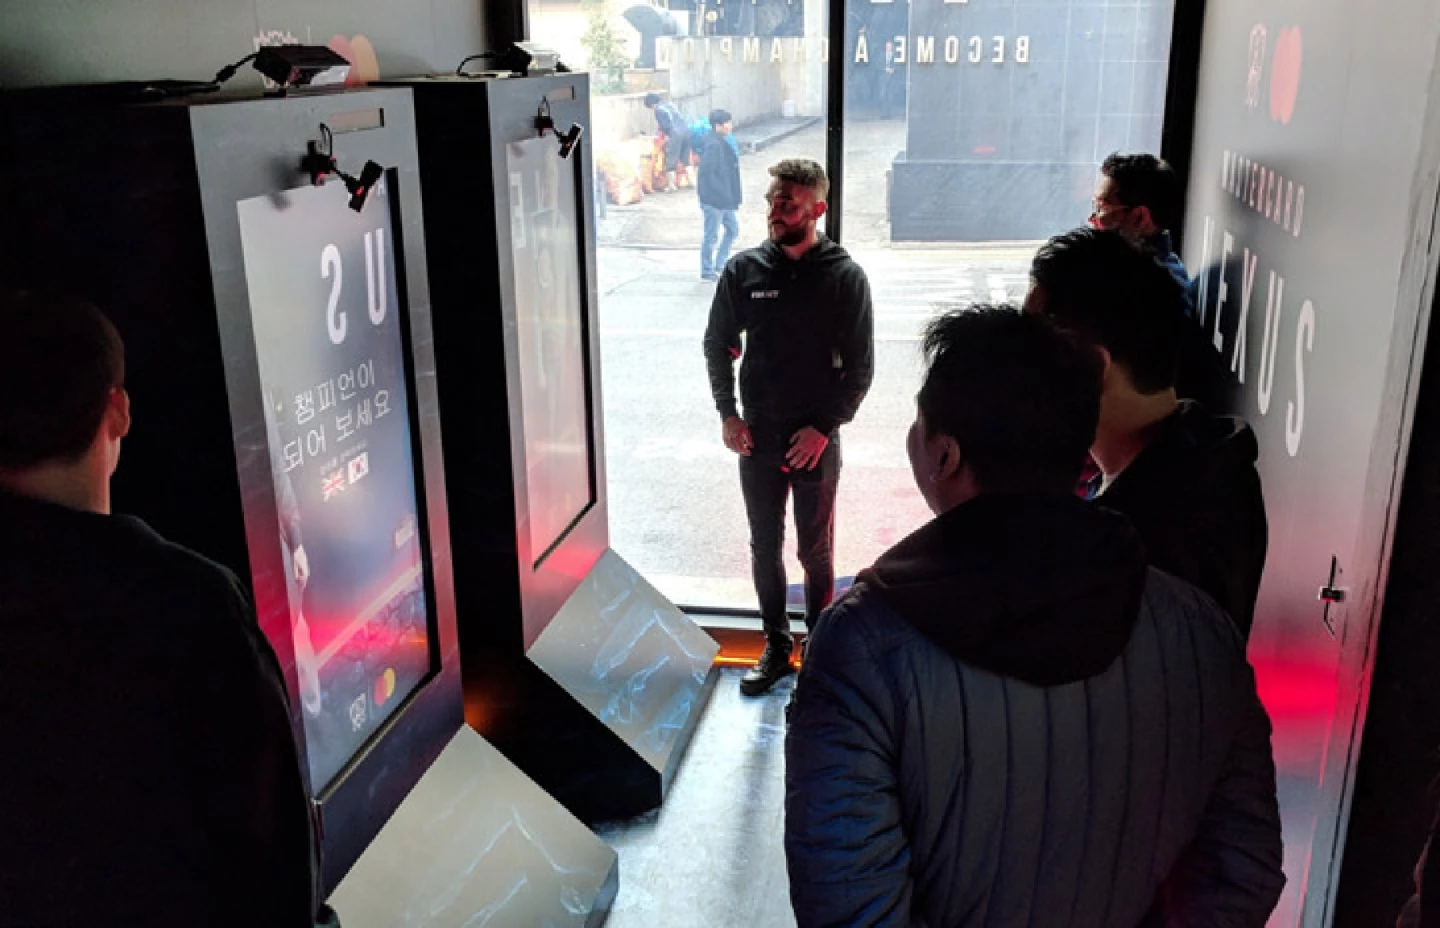 Five men standing around two Magic Mirror screens, watching the League of Legends Nexus experience